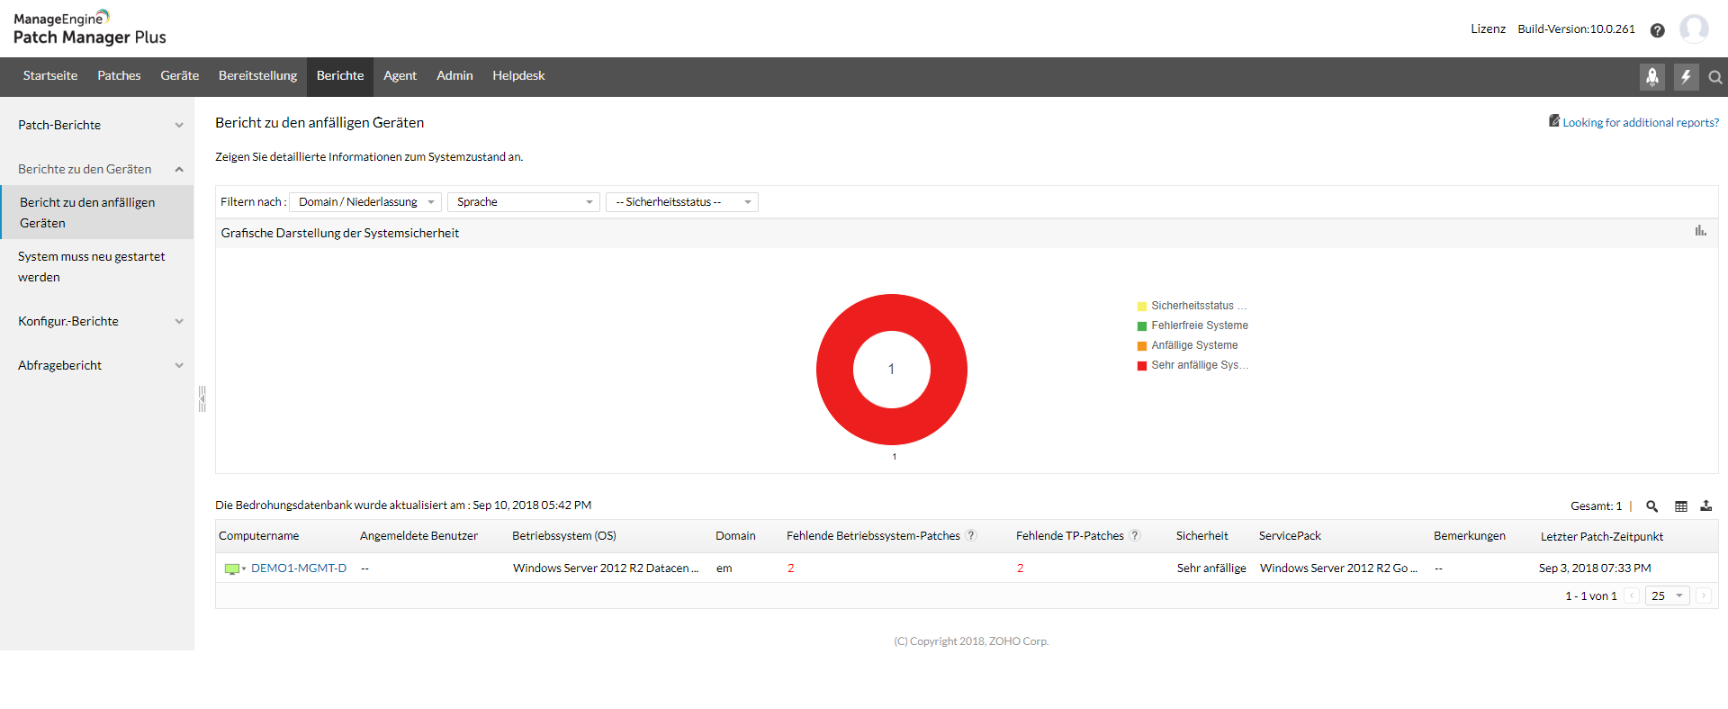 Screenshot Patch Manager Plus: Patchberichte zu anfälligen Systemen